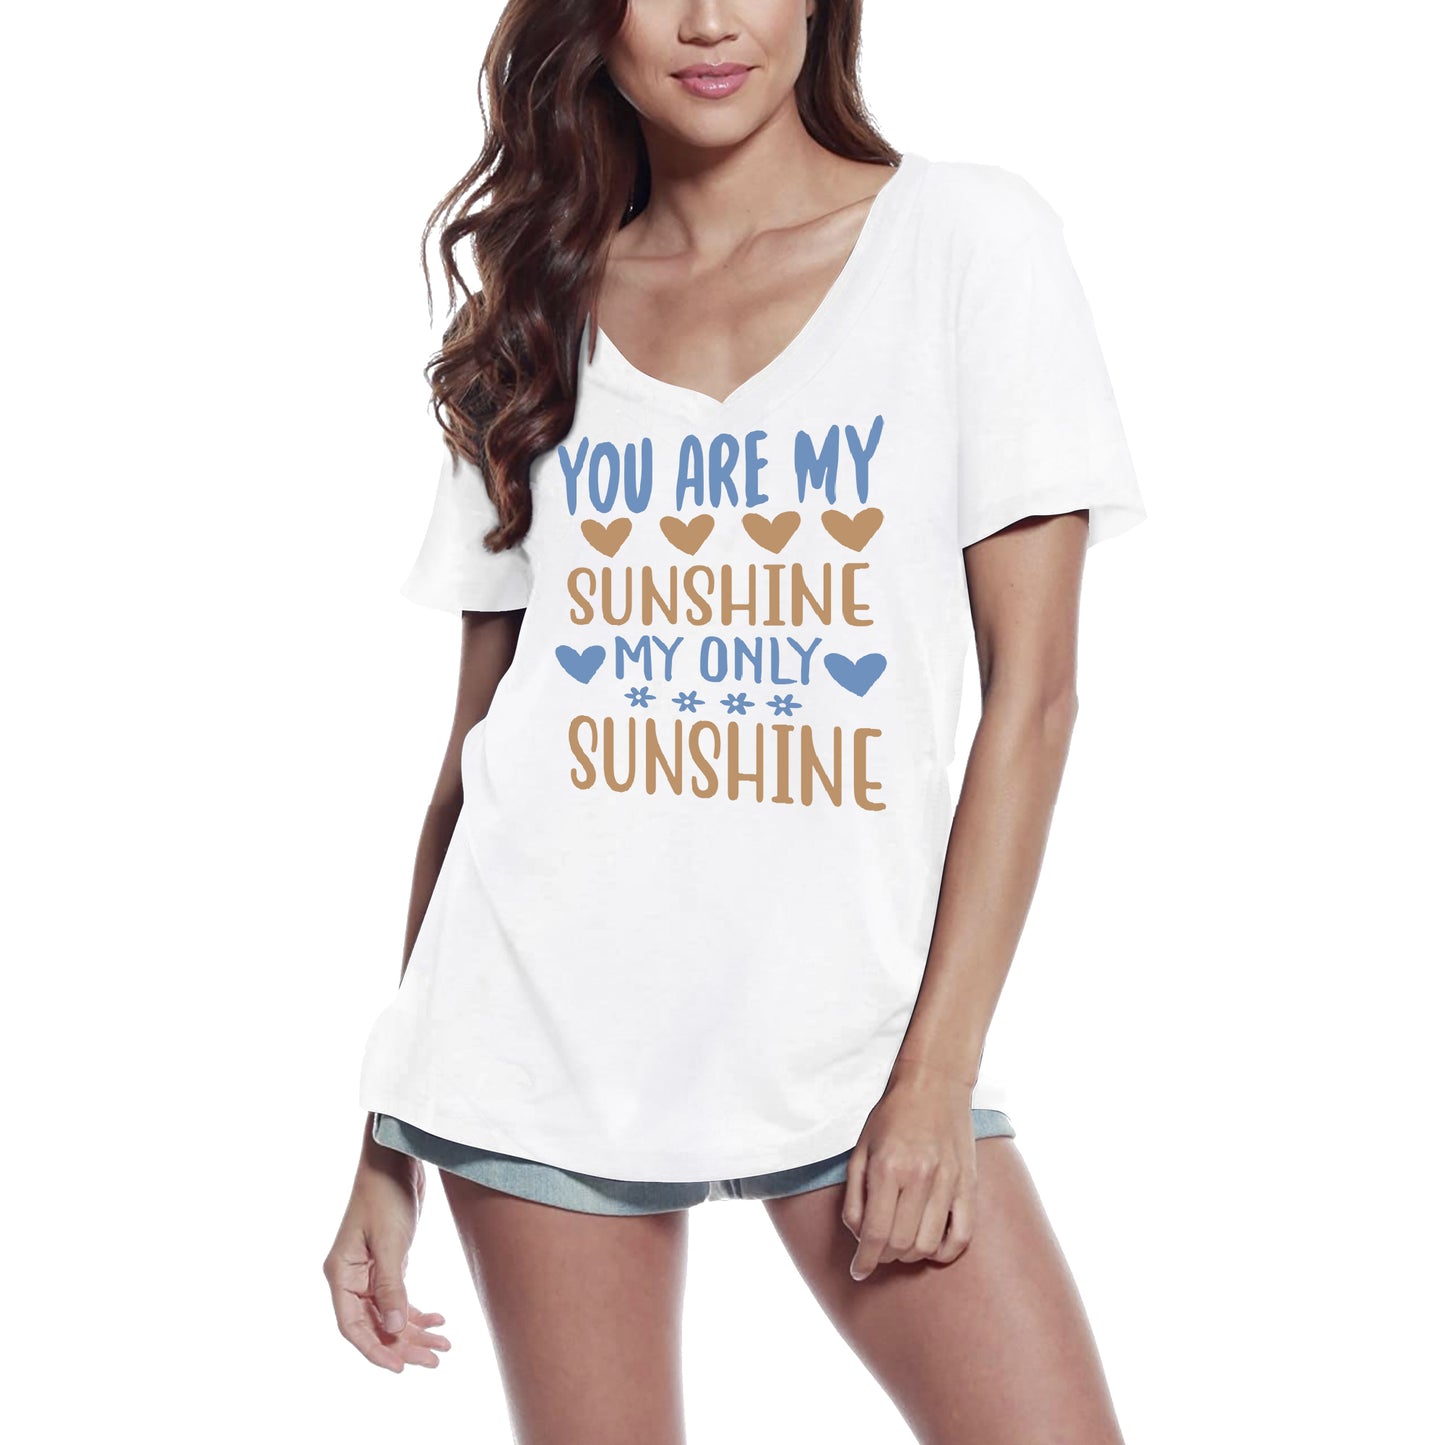 ULTRABASIC Women's T-Shirt My Only Sunshine - Short Sleeve Tee Shirt Tops